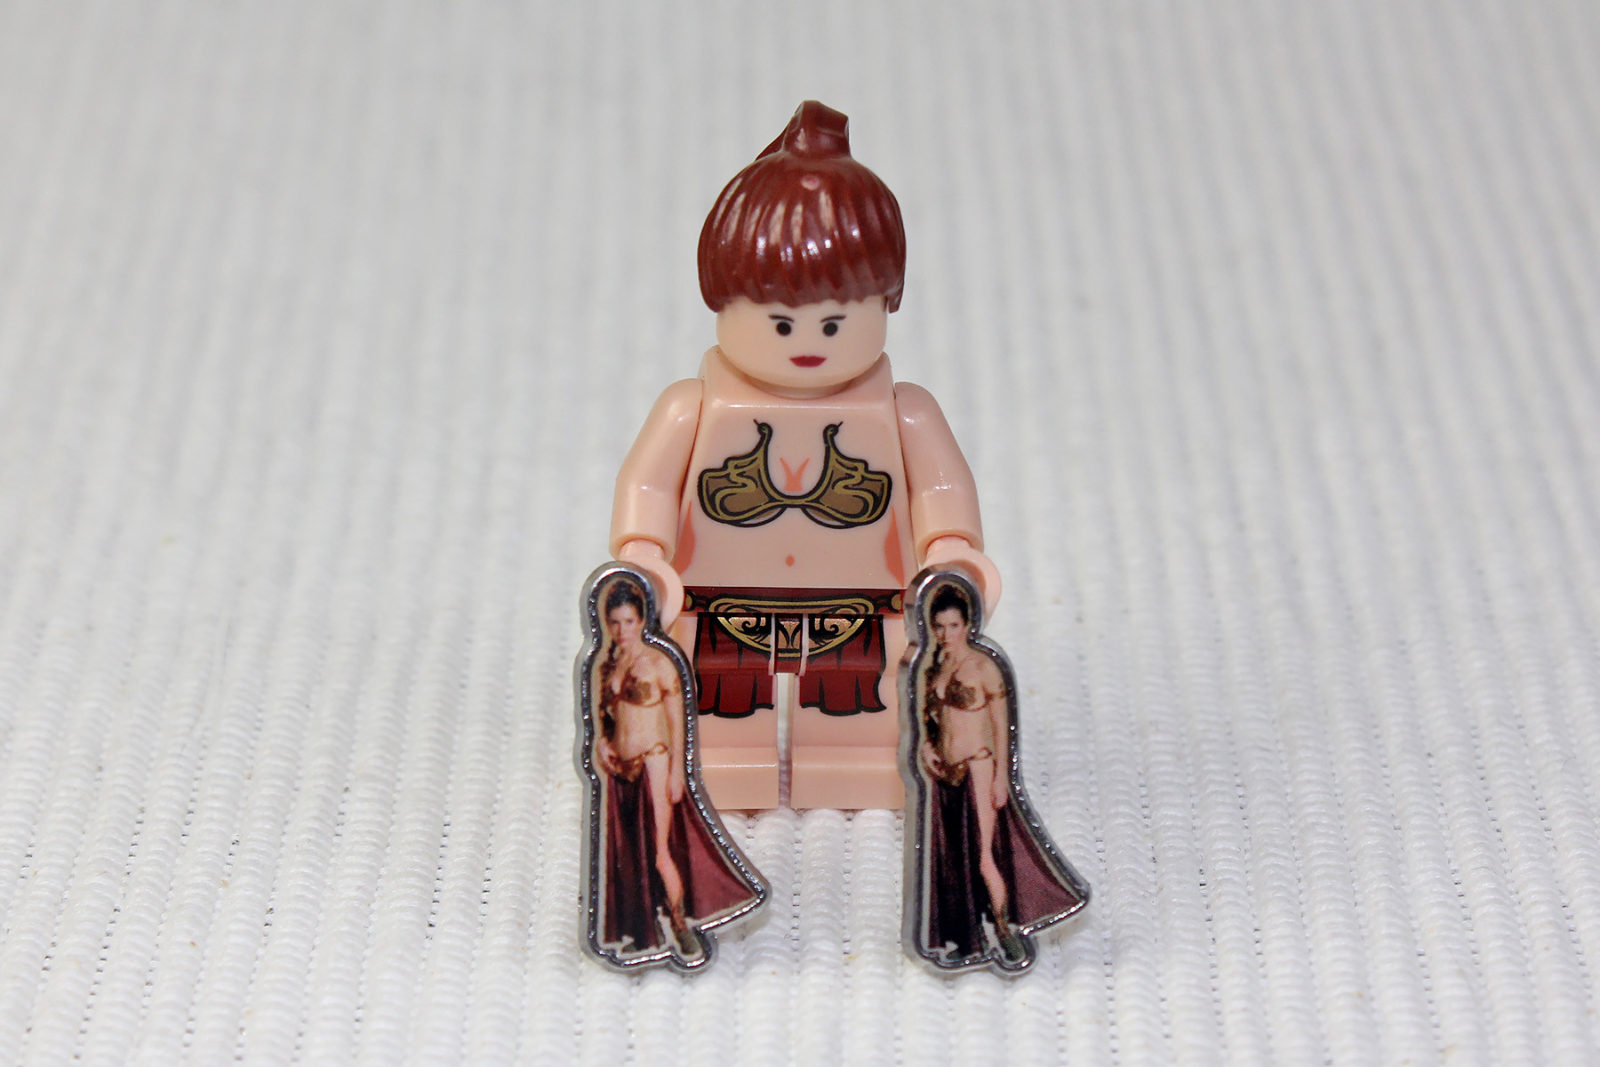 Star Wars Princess Leia cutout stud earrings